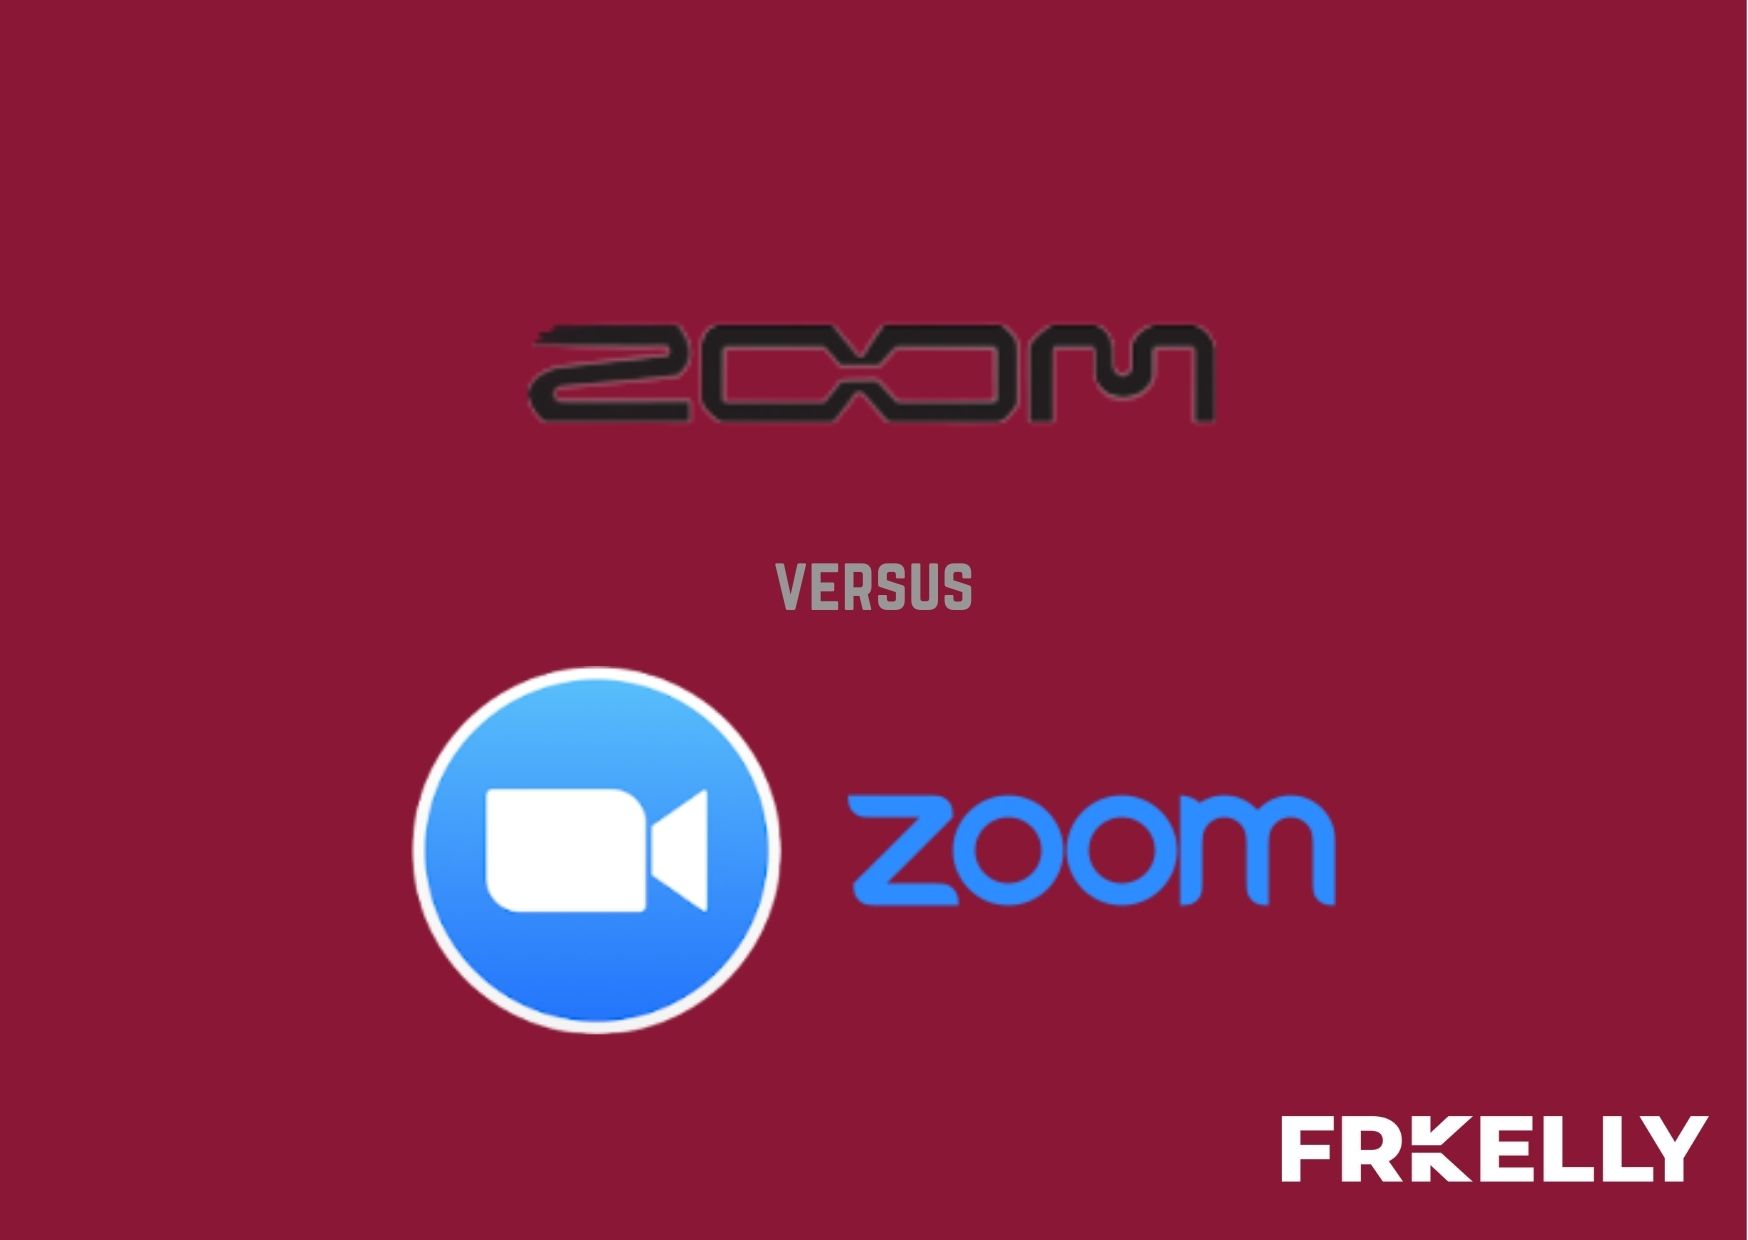 Zoom KK logo versus Zoom logo with FRKelly logo